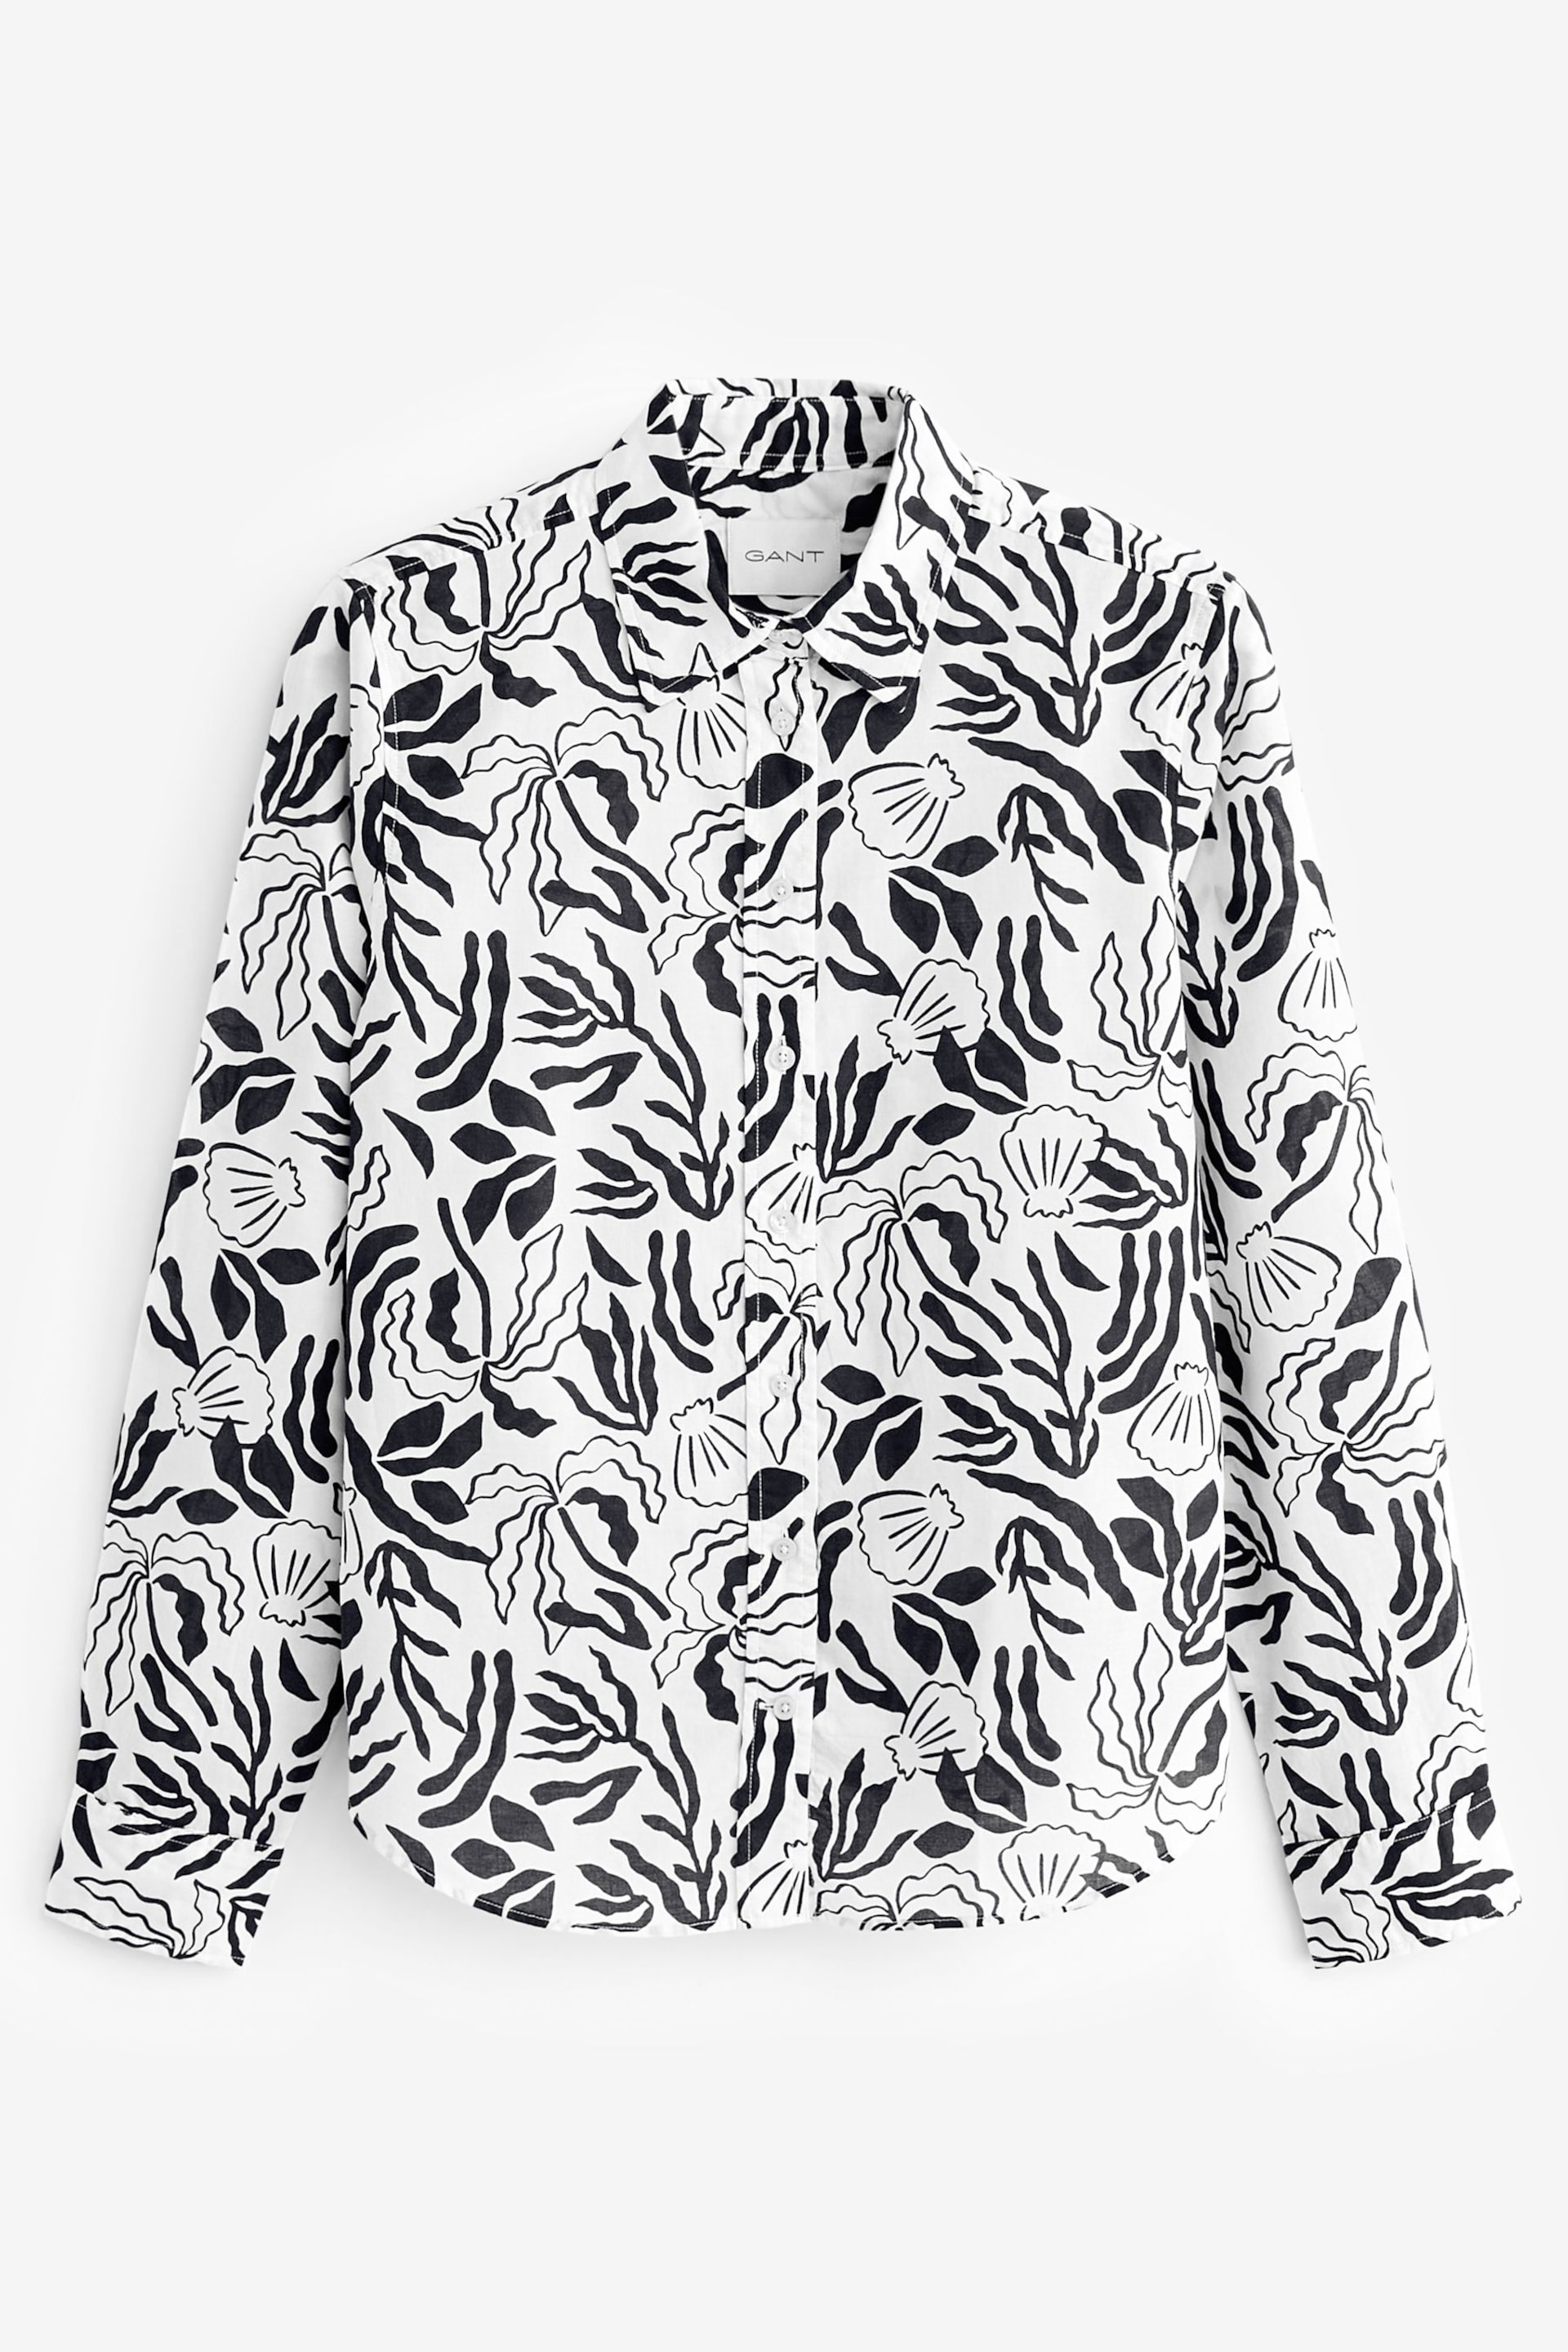 GANT White Regular Fit Palm Print Cotton Voile Shirt - Image 5 of 5